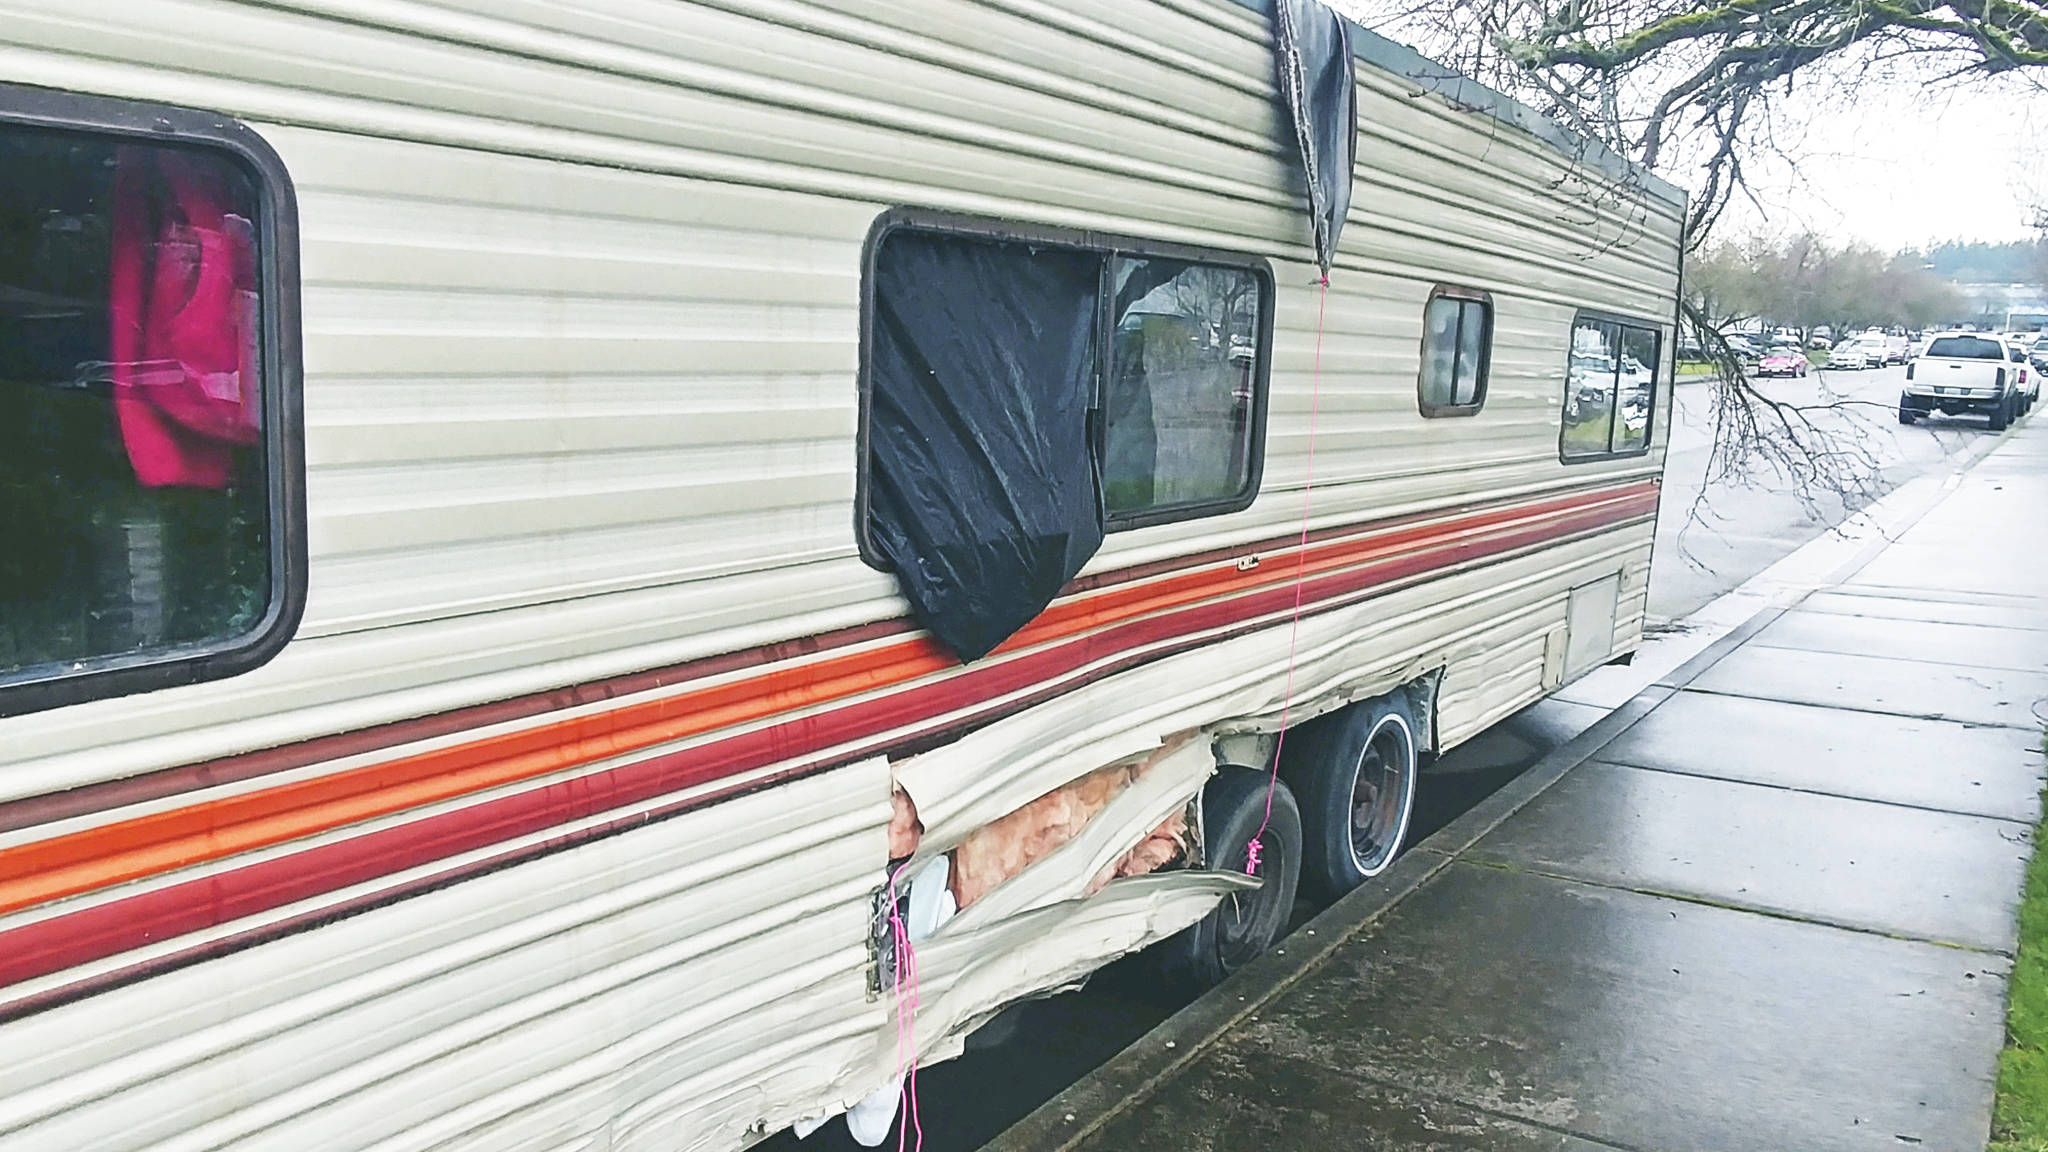 An abandoned trailer illegally parked creates an eyesore for one Arlington neighborhood.